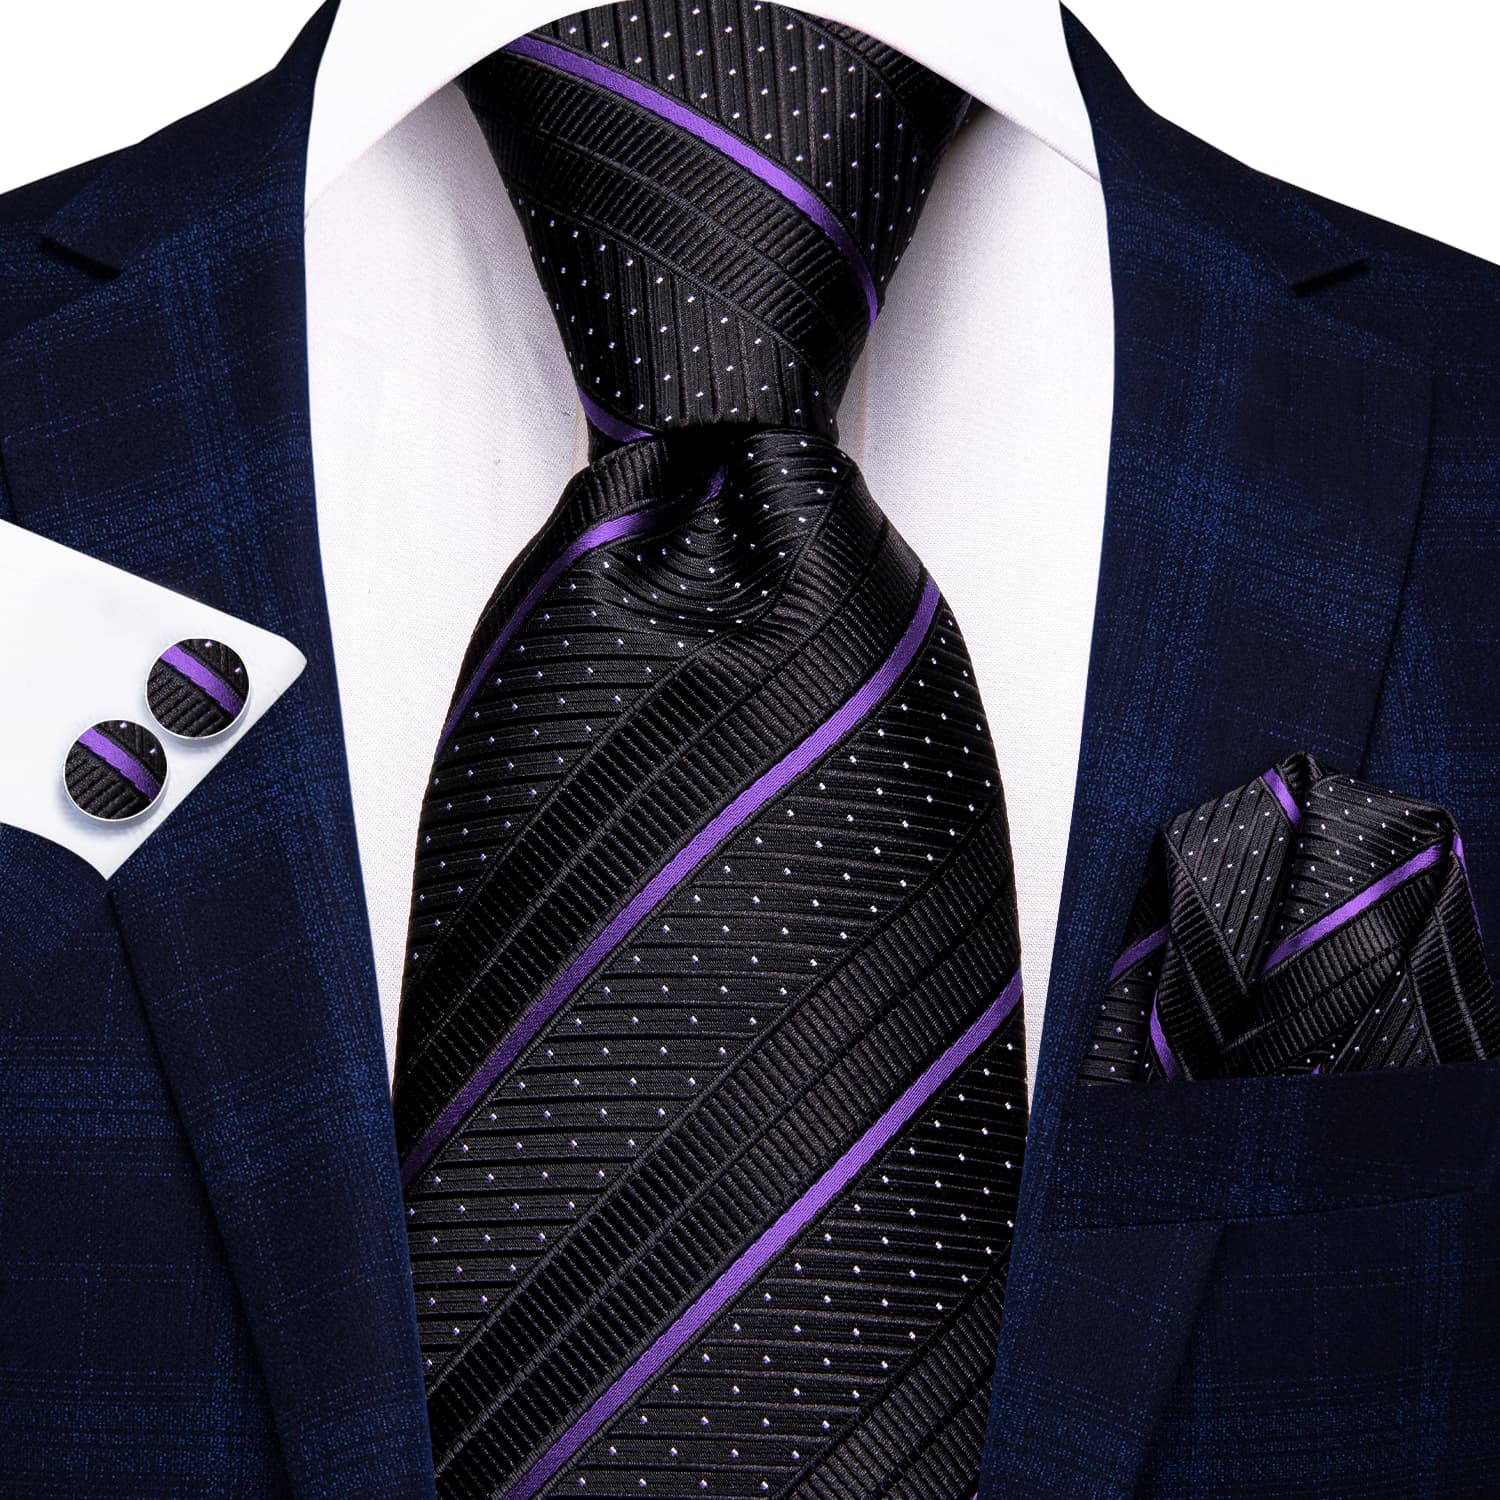 black tie event dresses  dark purple tie  